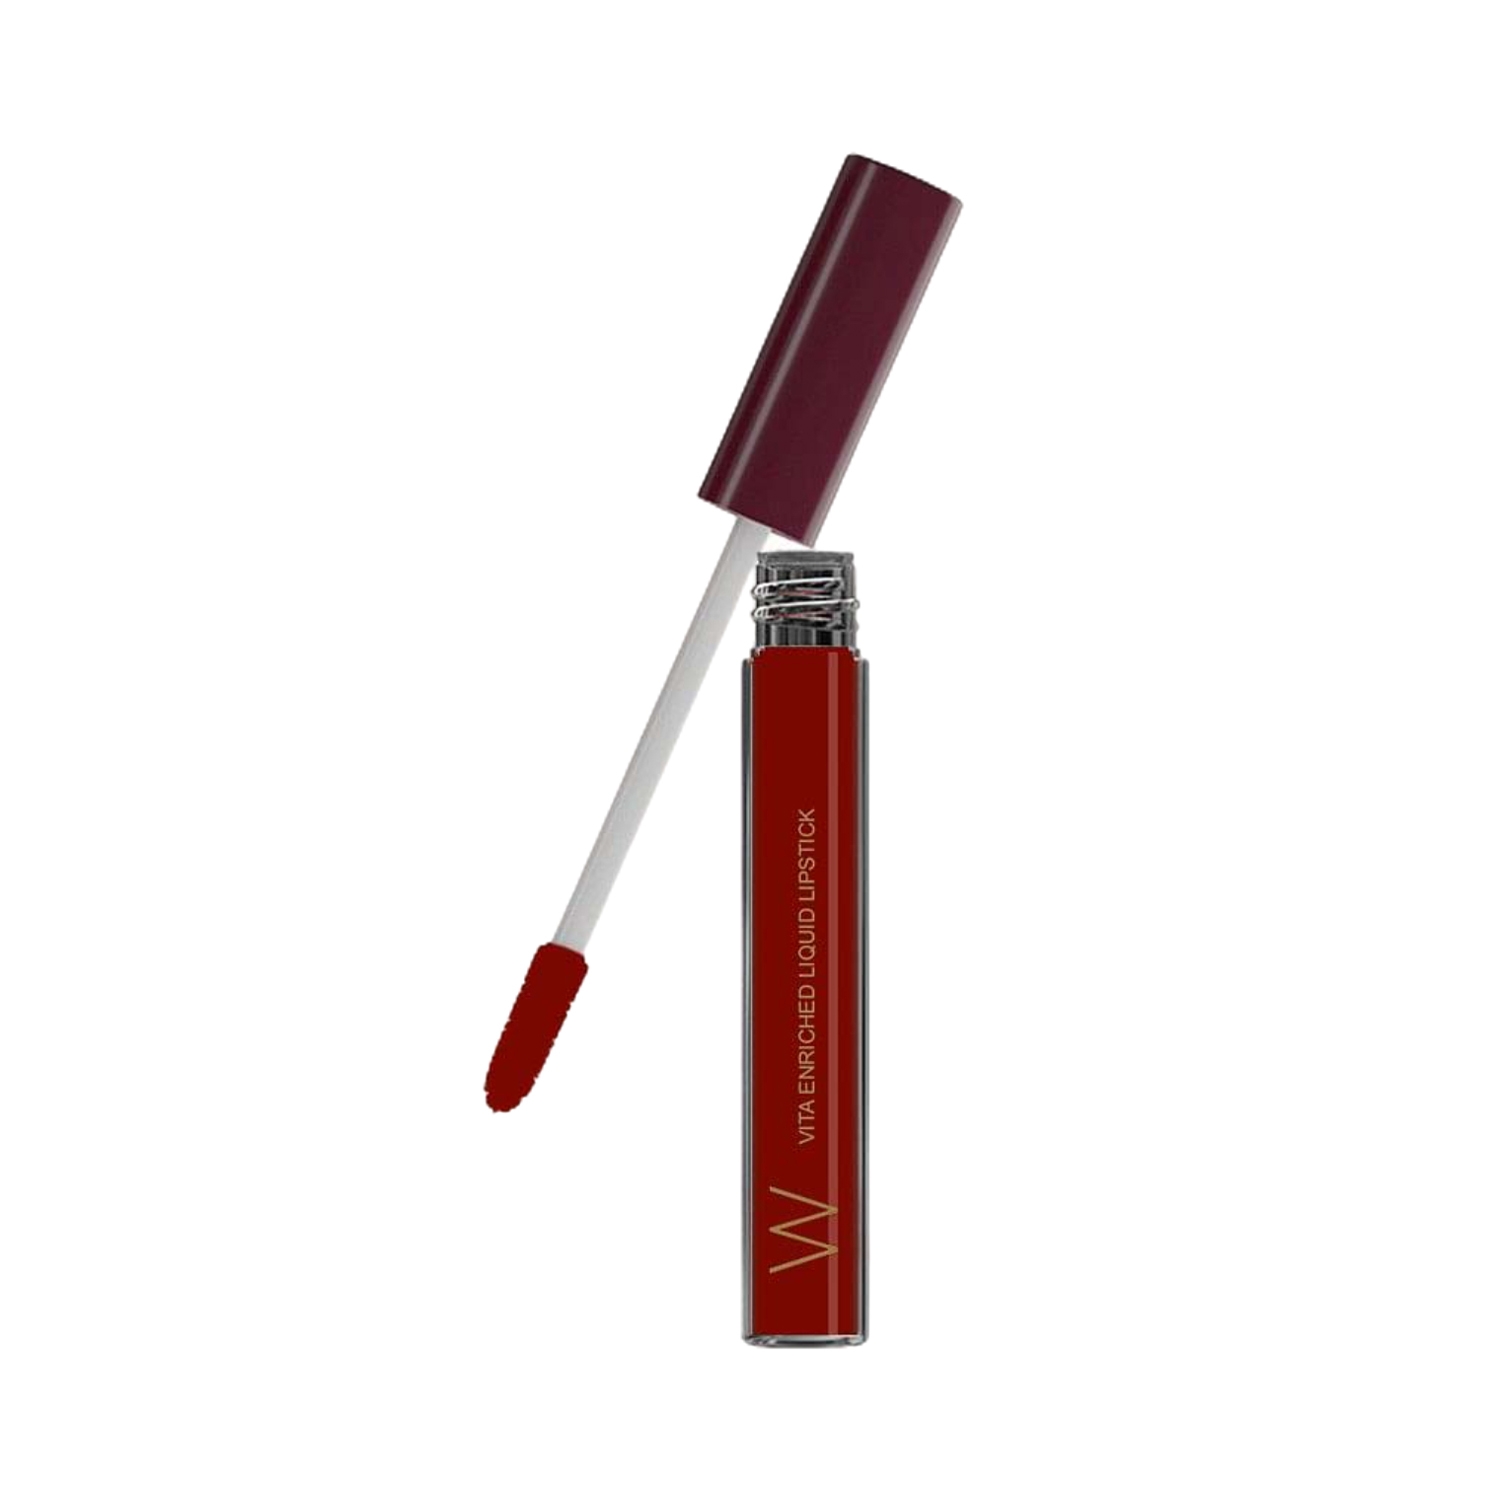 W | W Vita Enriched Liquid Lipstick - Chillax (3g)